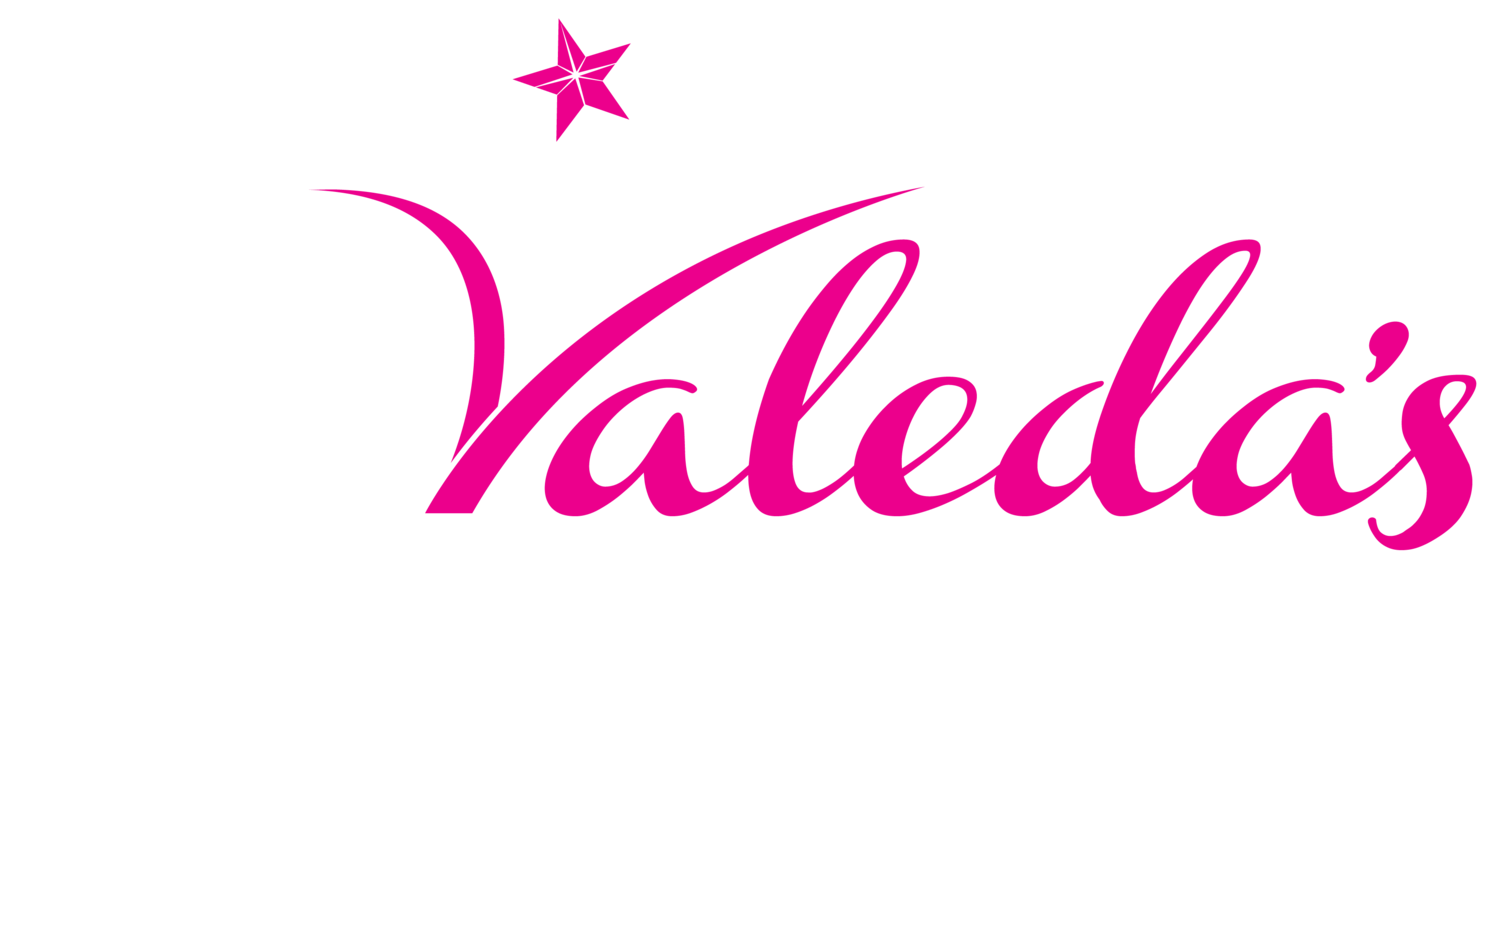 Valeda's Hope